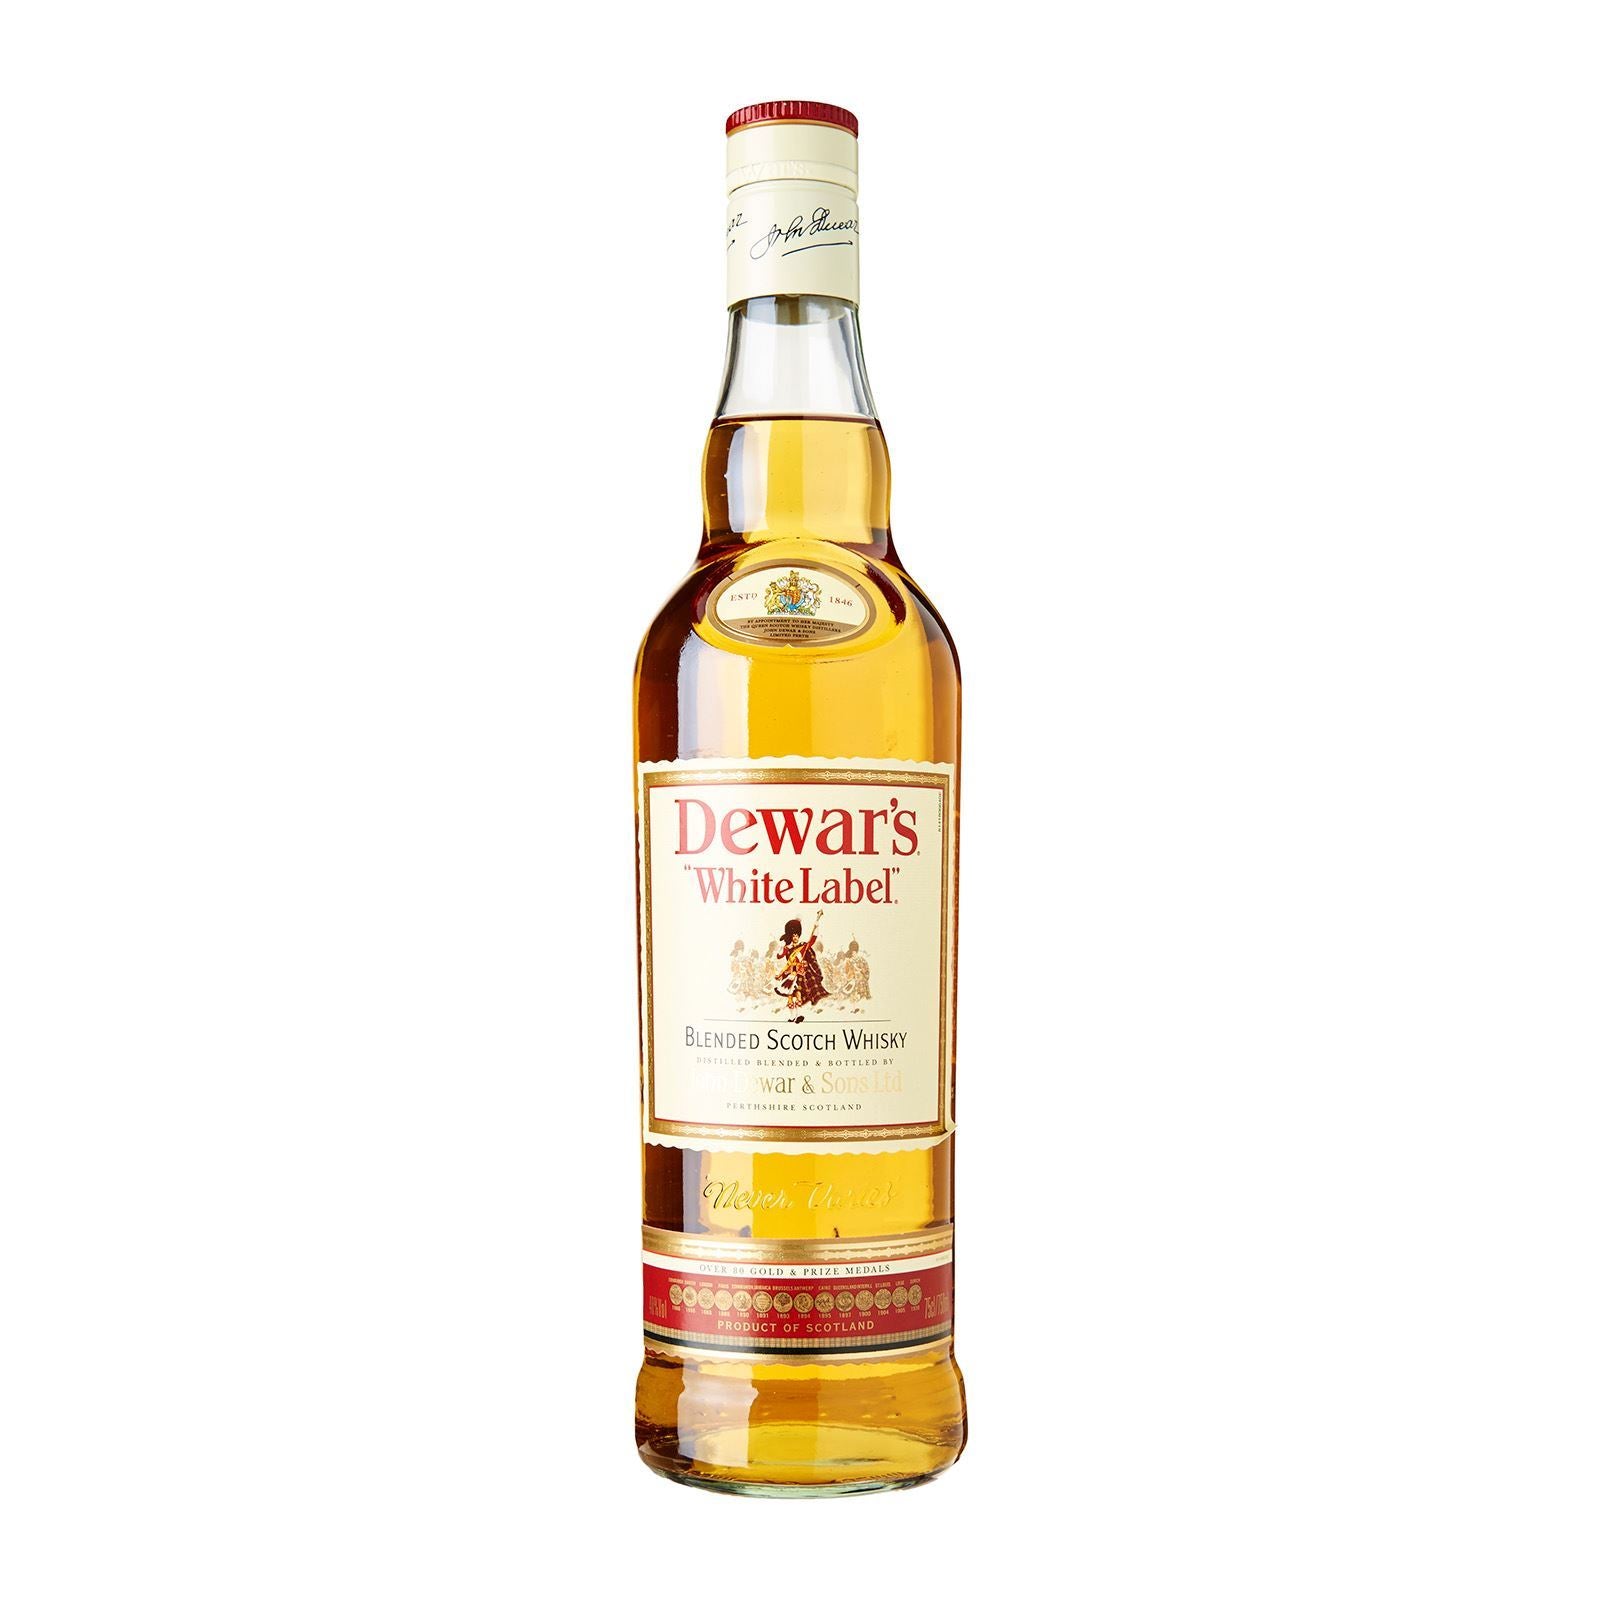 Dewars White Label Whisky